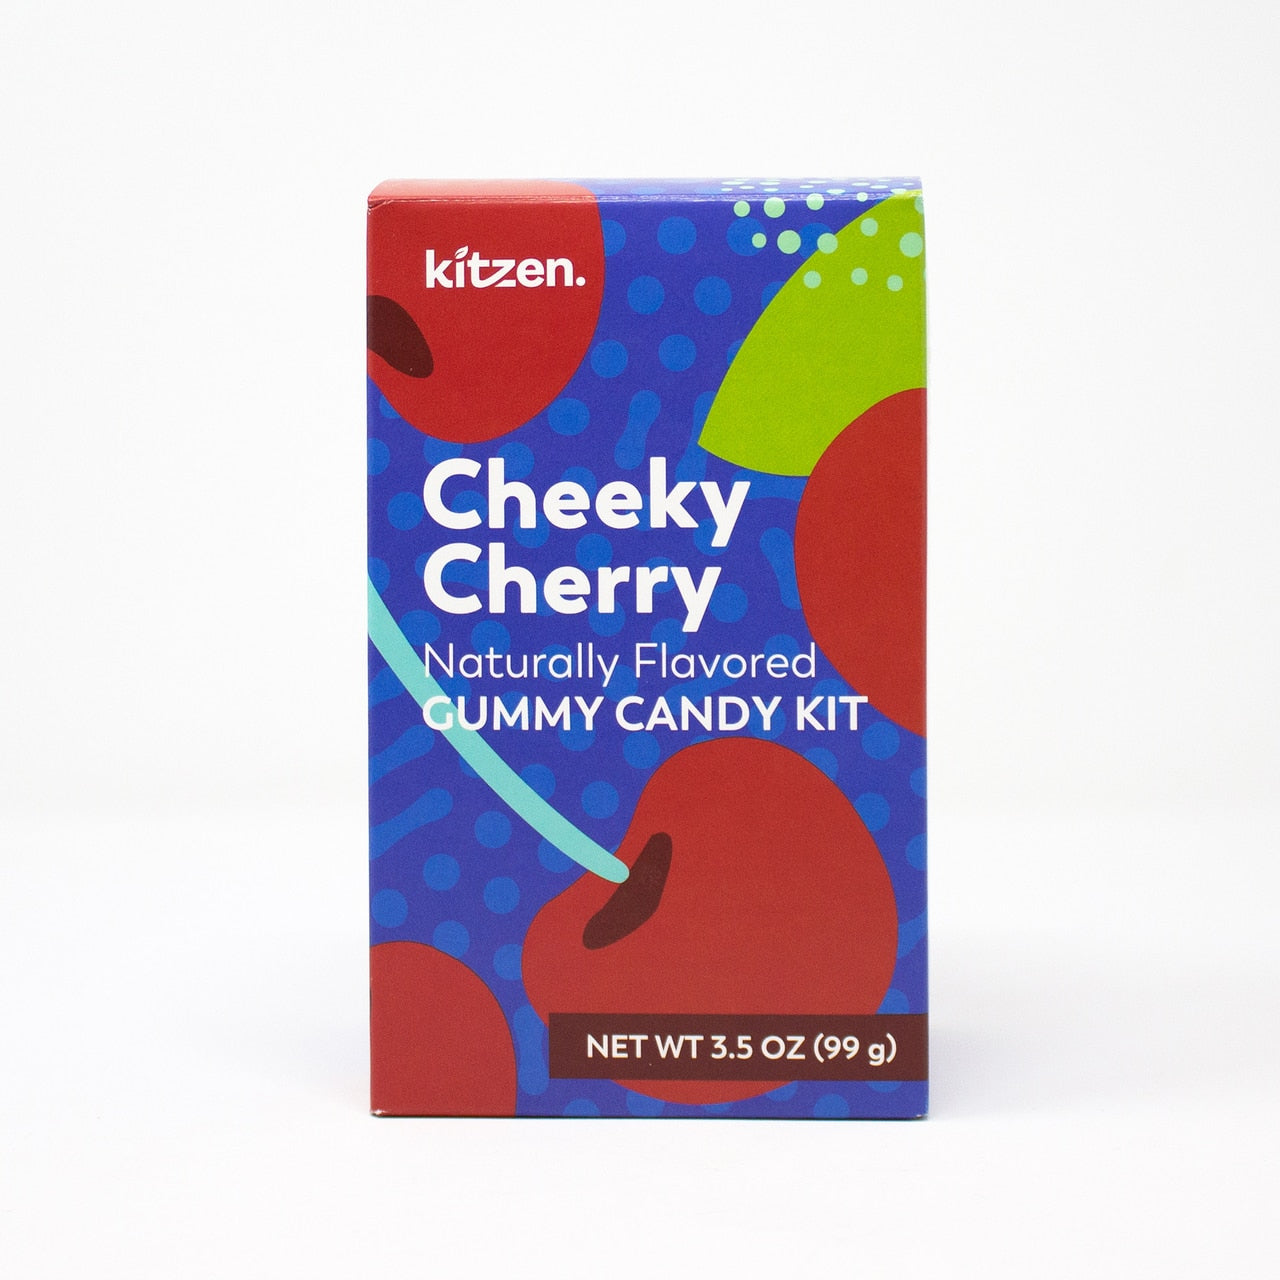 kitzen gummy candy kit cheeky cherry